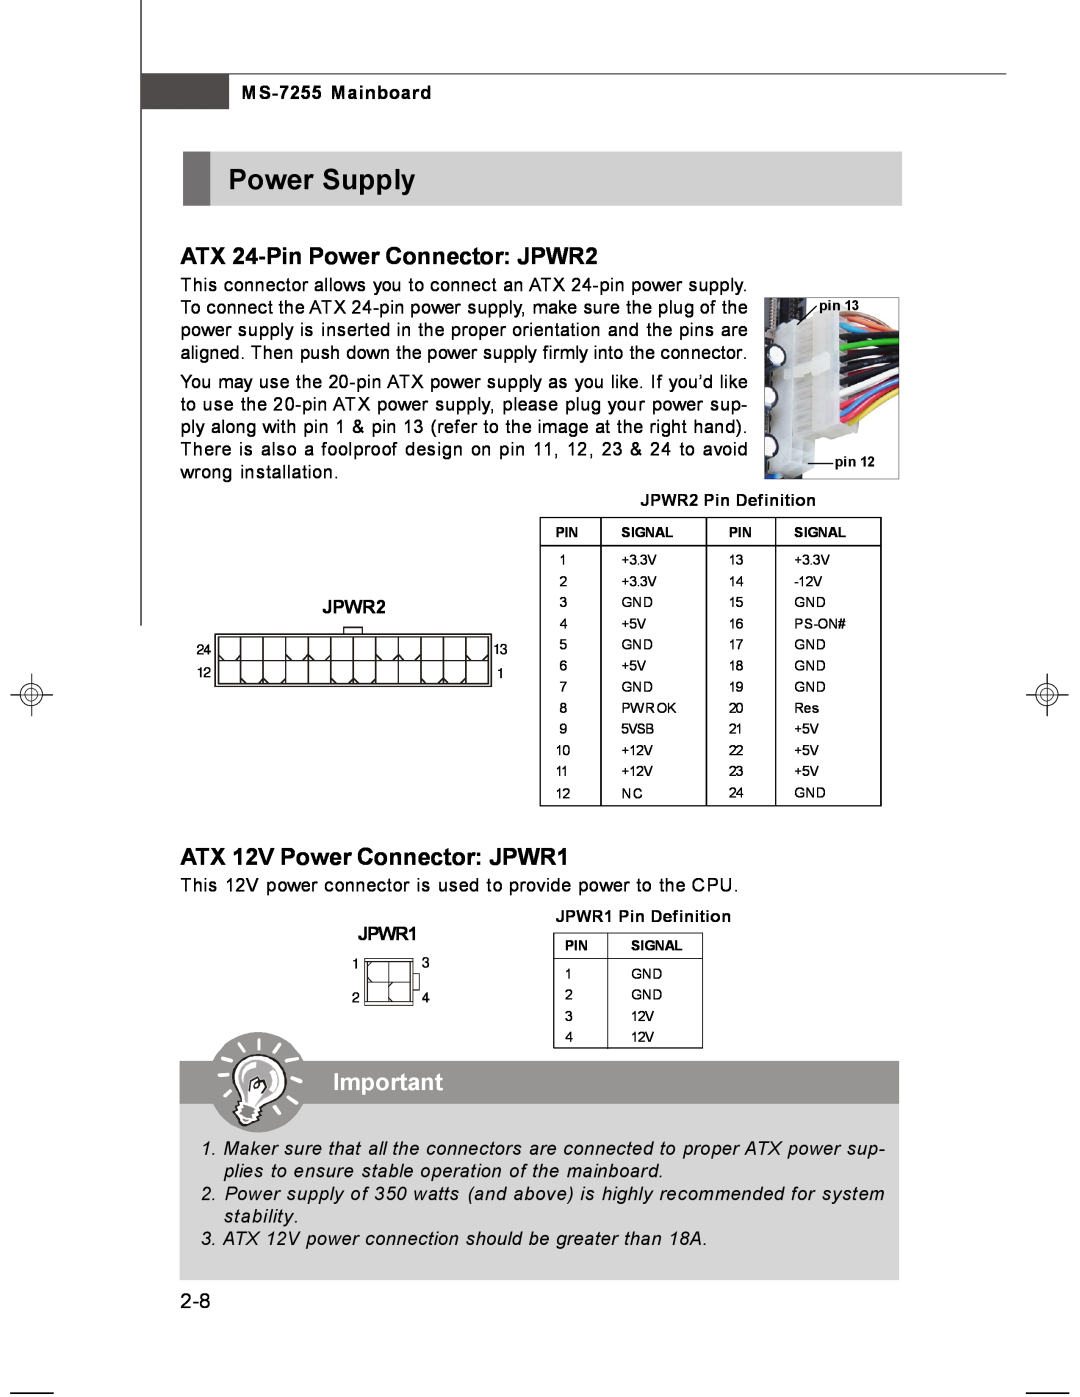 MSI manual Power Supply, ATX 24-Pin Power Connector JPWR2, ATX 12V Power Connector JPWR1, MS-7255 Mainboard 